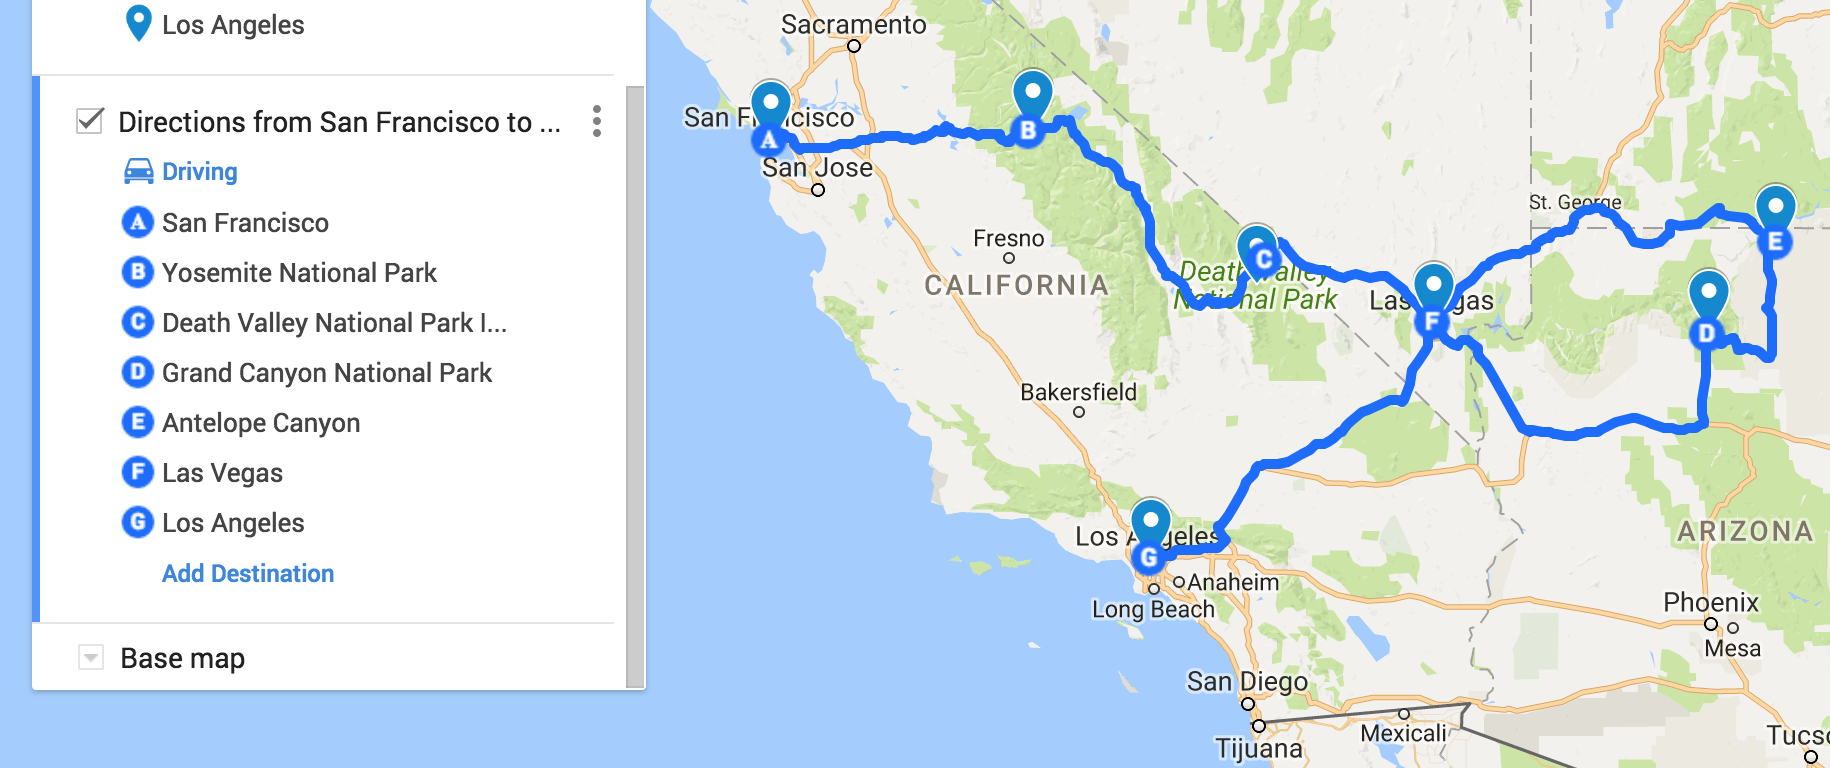 16 california road trip ideas from a california girl (photos) • travelbreak